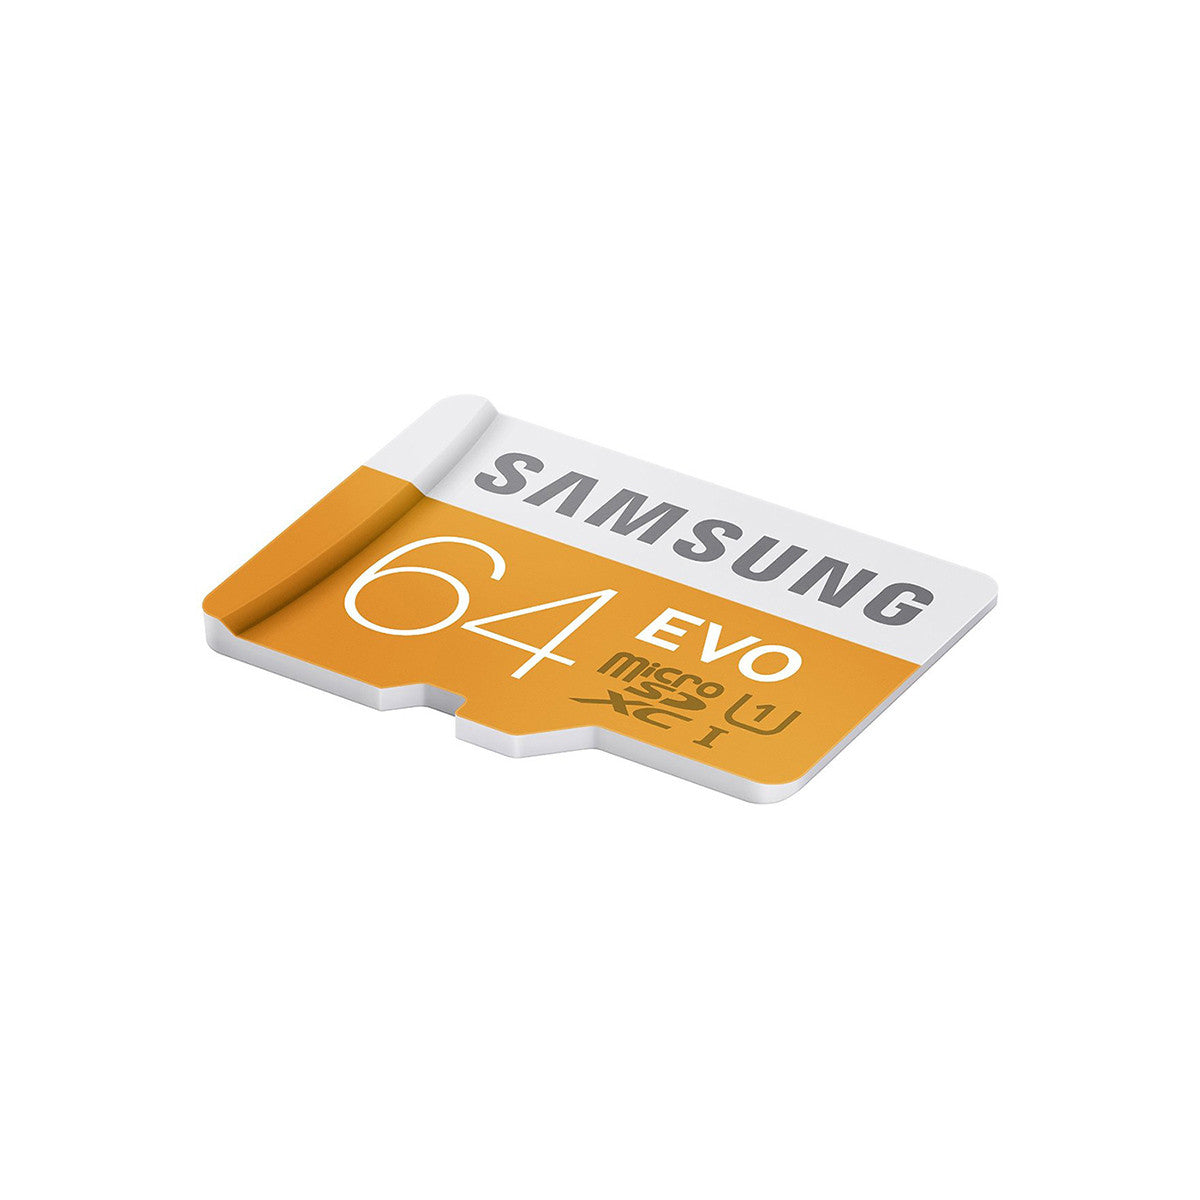 Samsung Evo Micro SD 64Gb